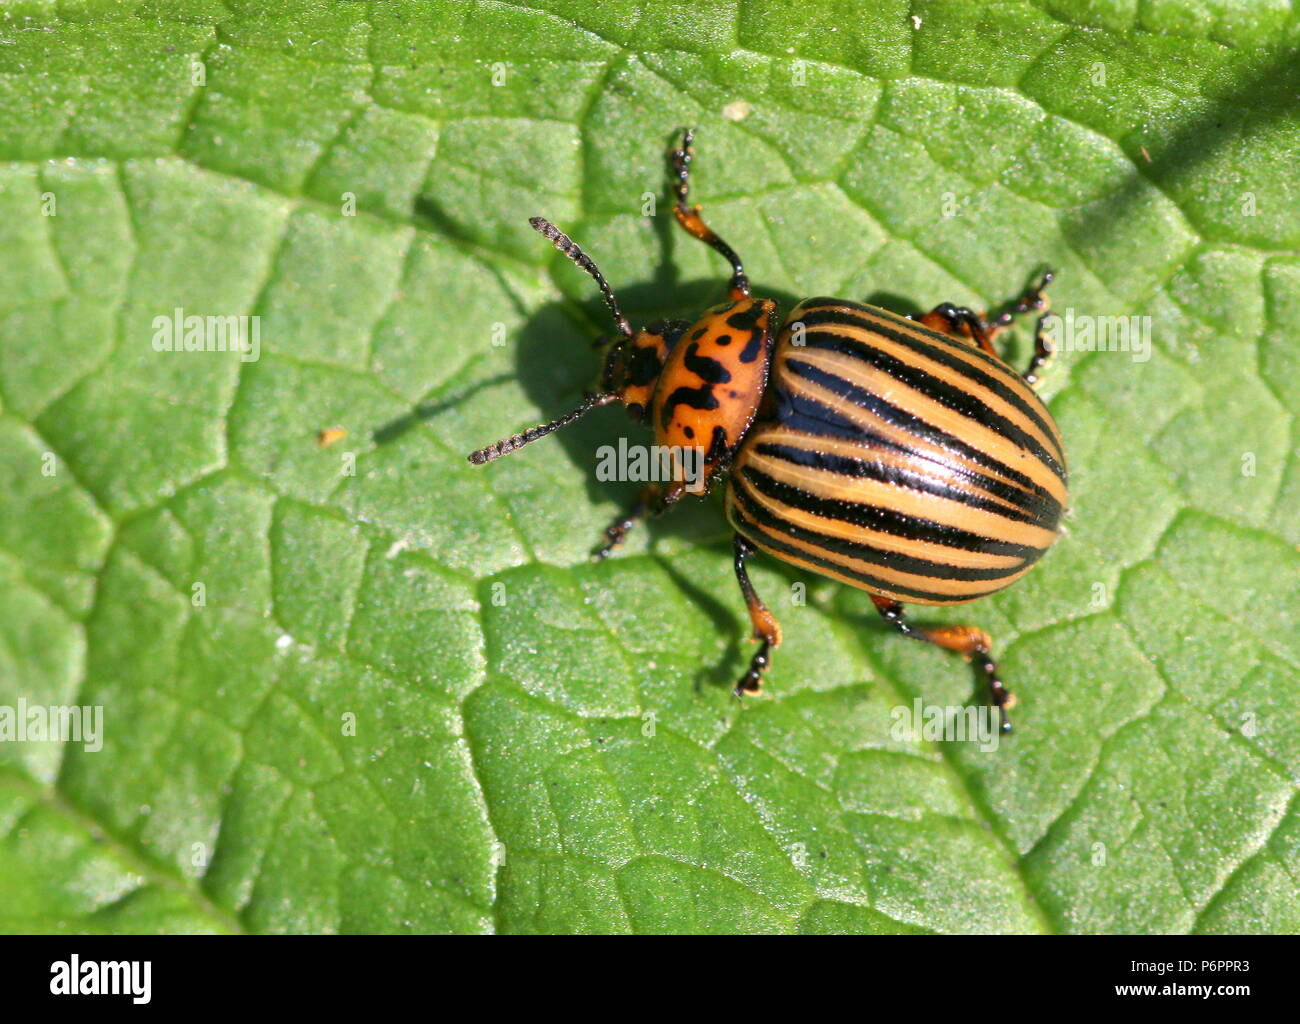 Colorado potato beetle (Leptinotarsa decemlineata) a harmful invasive species in Europe Stock Photo